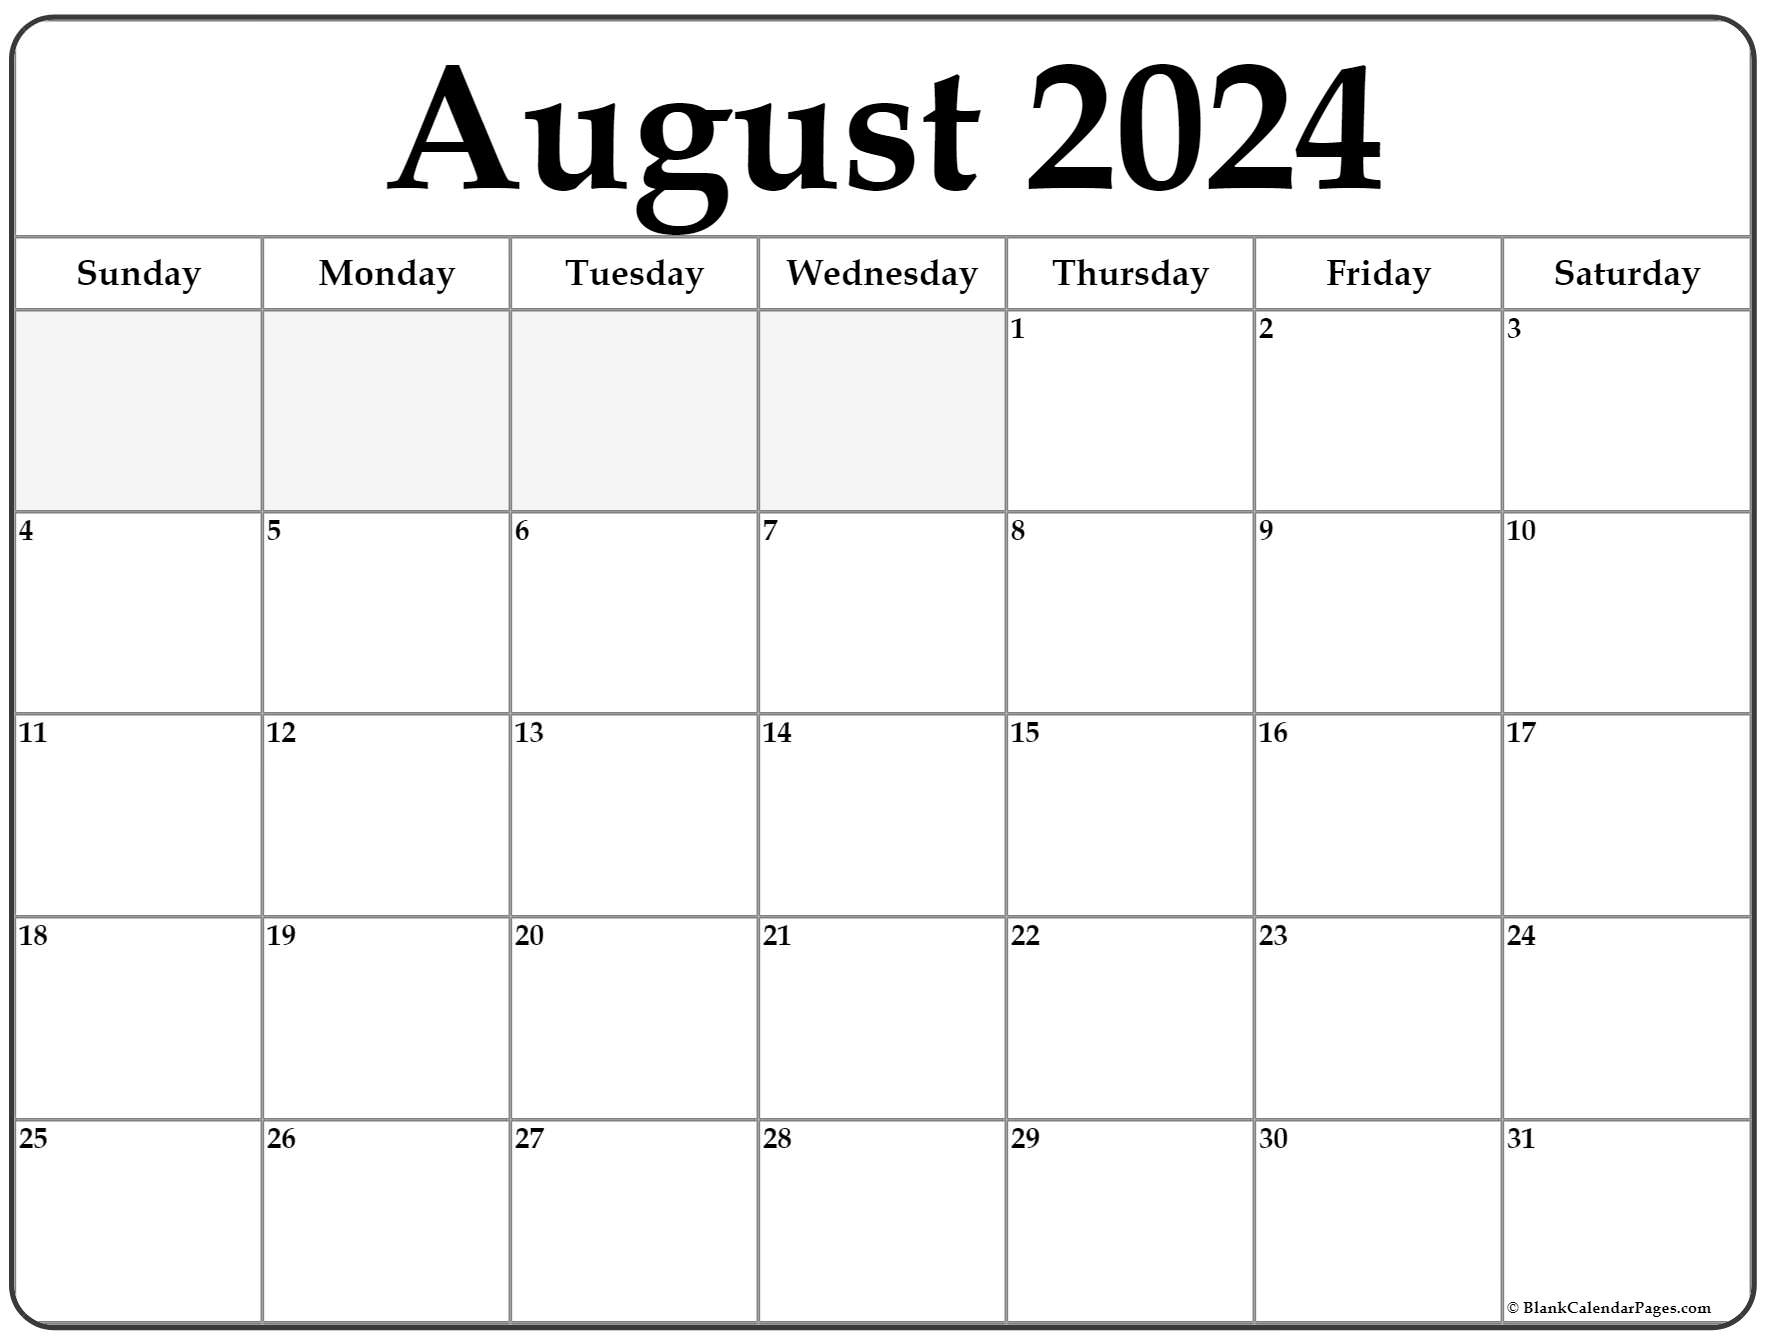 August 2024 Calendar | Free Printable Calendar pertaining to Free Printable Calendar August 2024 To July 202